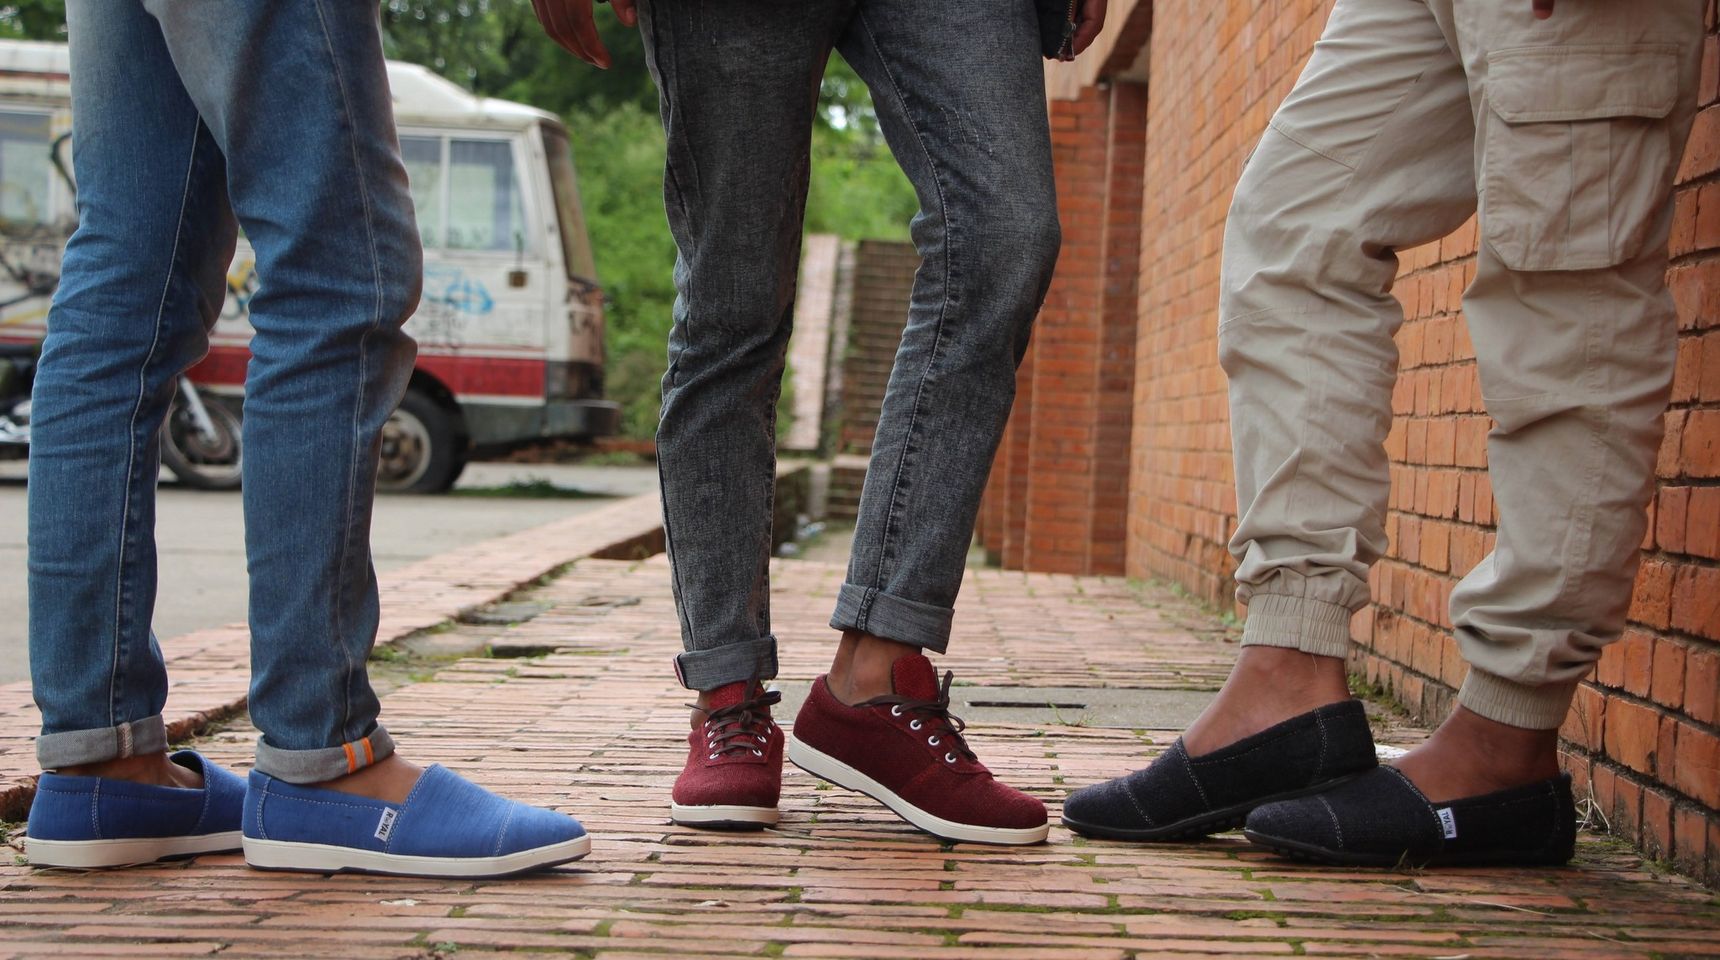 Royal Hemp: Introducing hemp shoes to the Nepali market